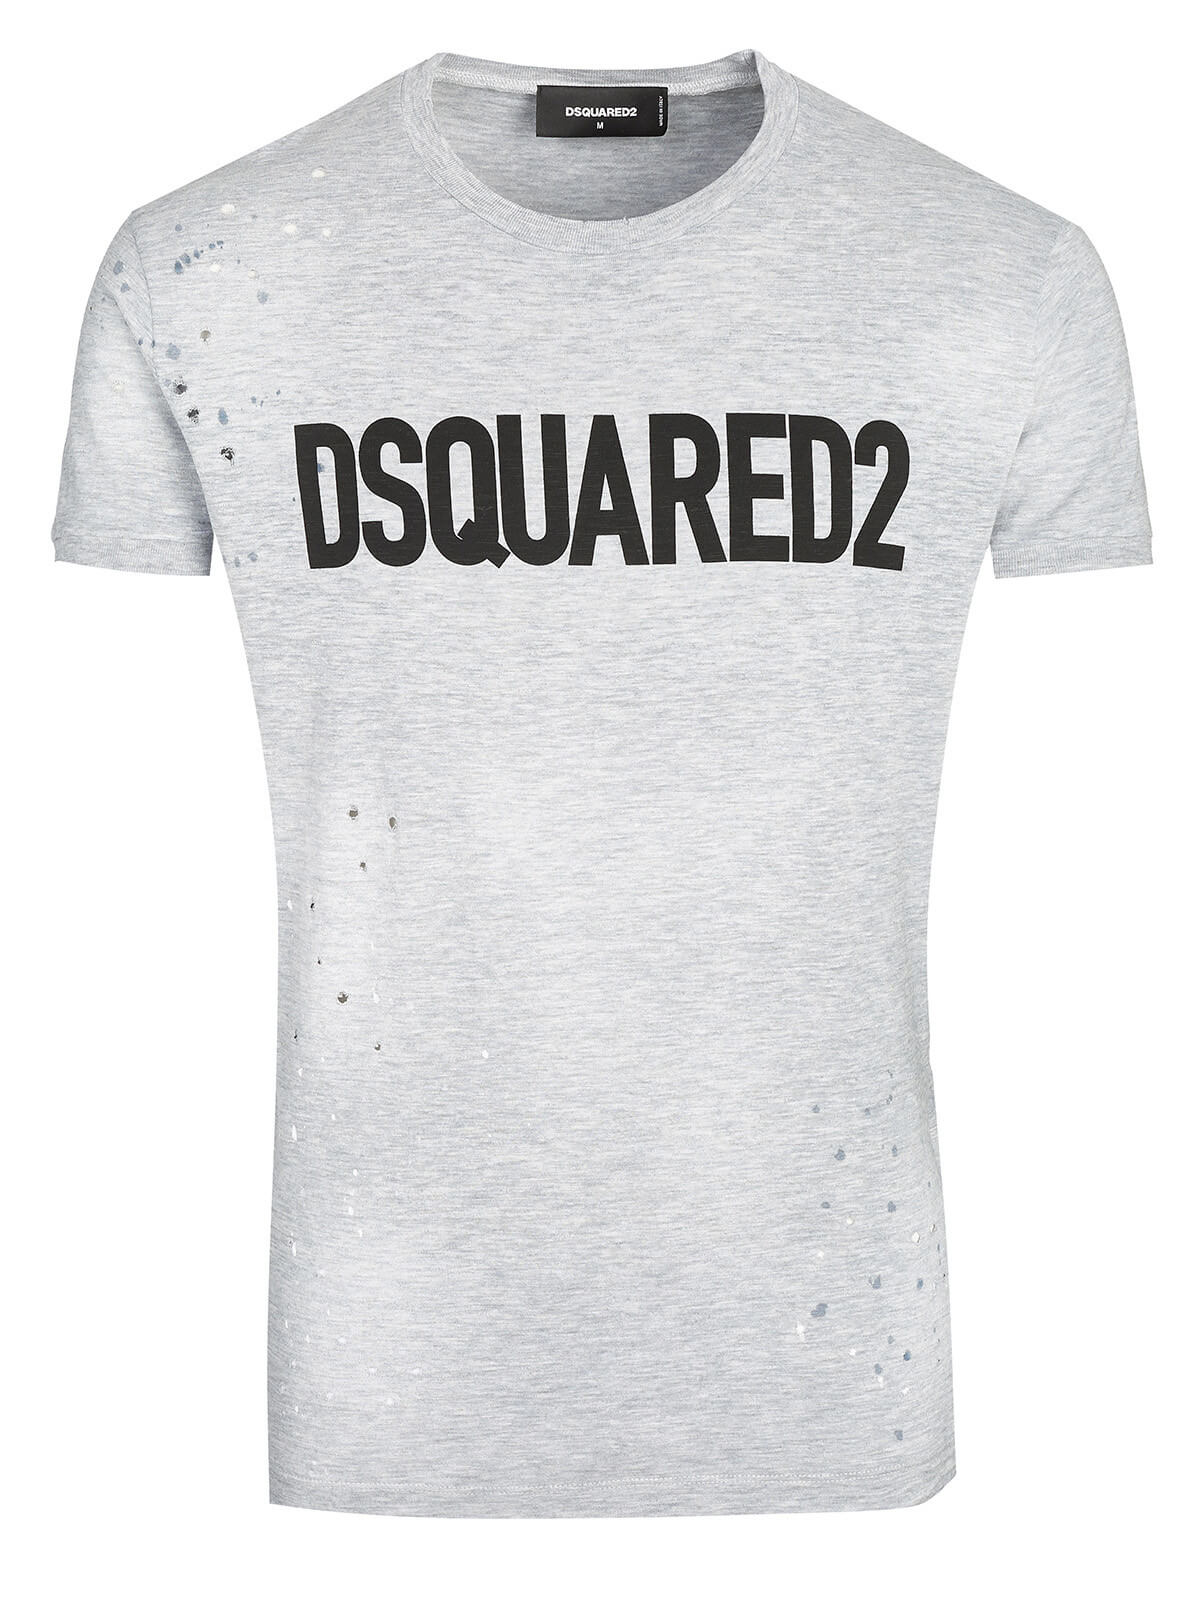 dsquared tshirt online